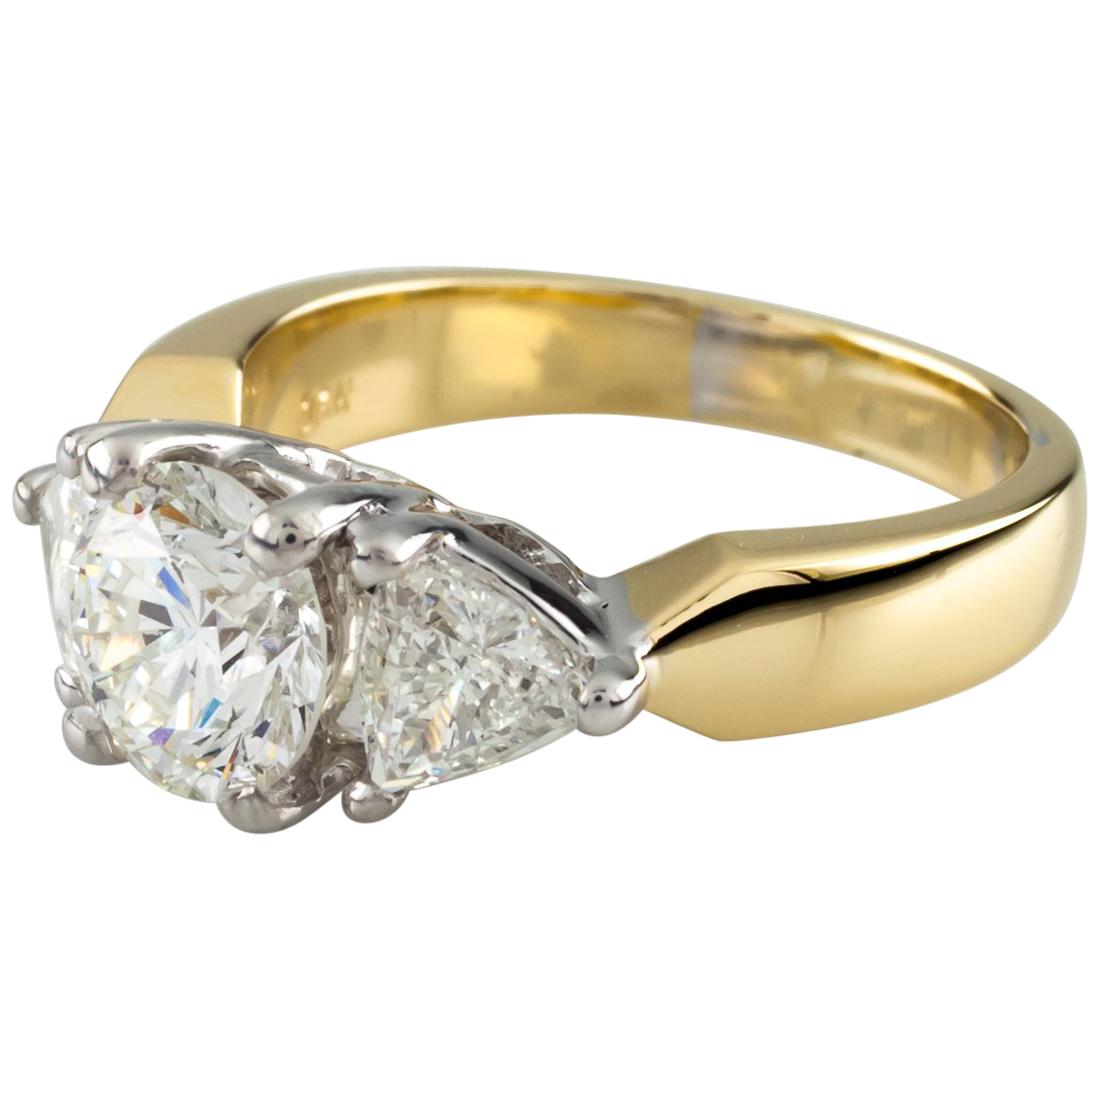 1.91 Carat Round Diamond 3-Stone 18 Karat White and Yellow Gold Engagement Ring